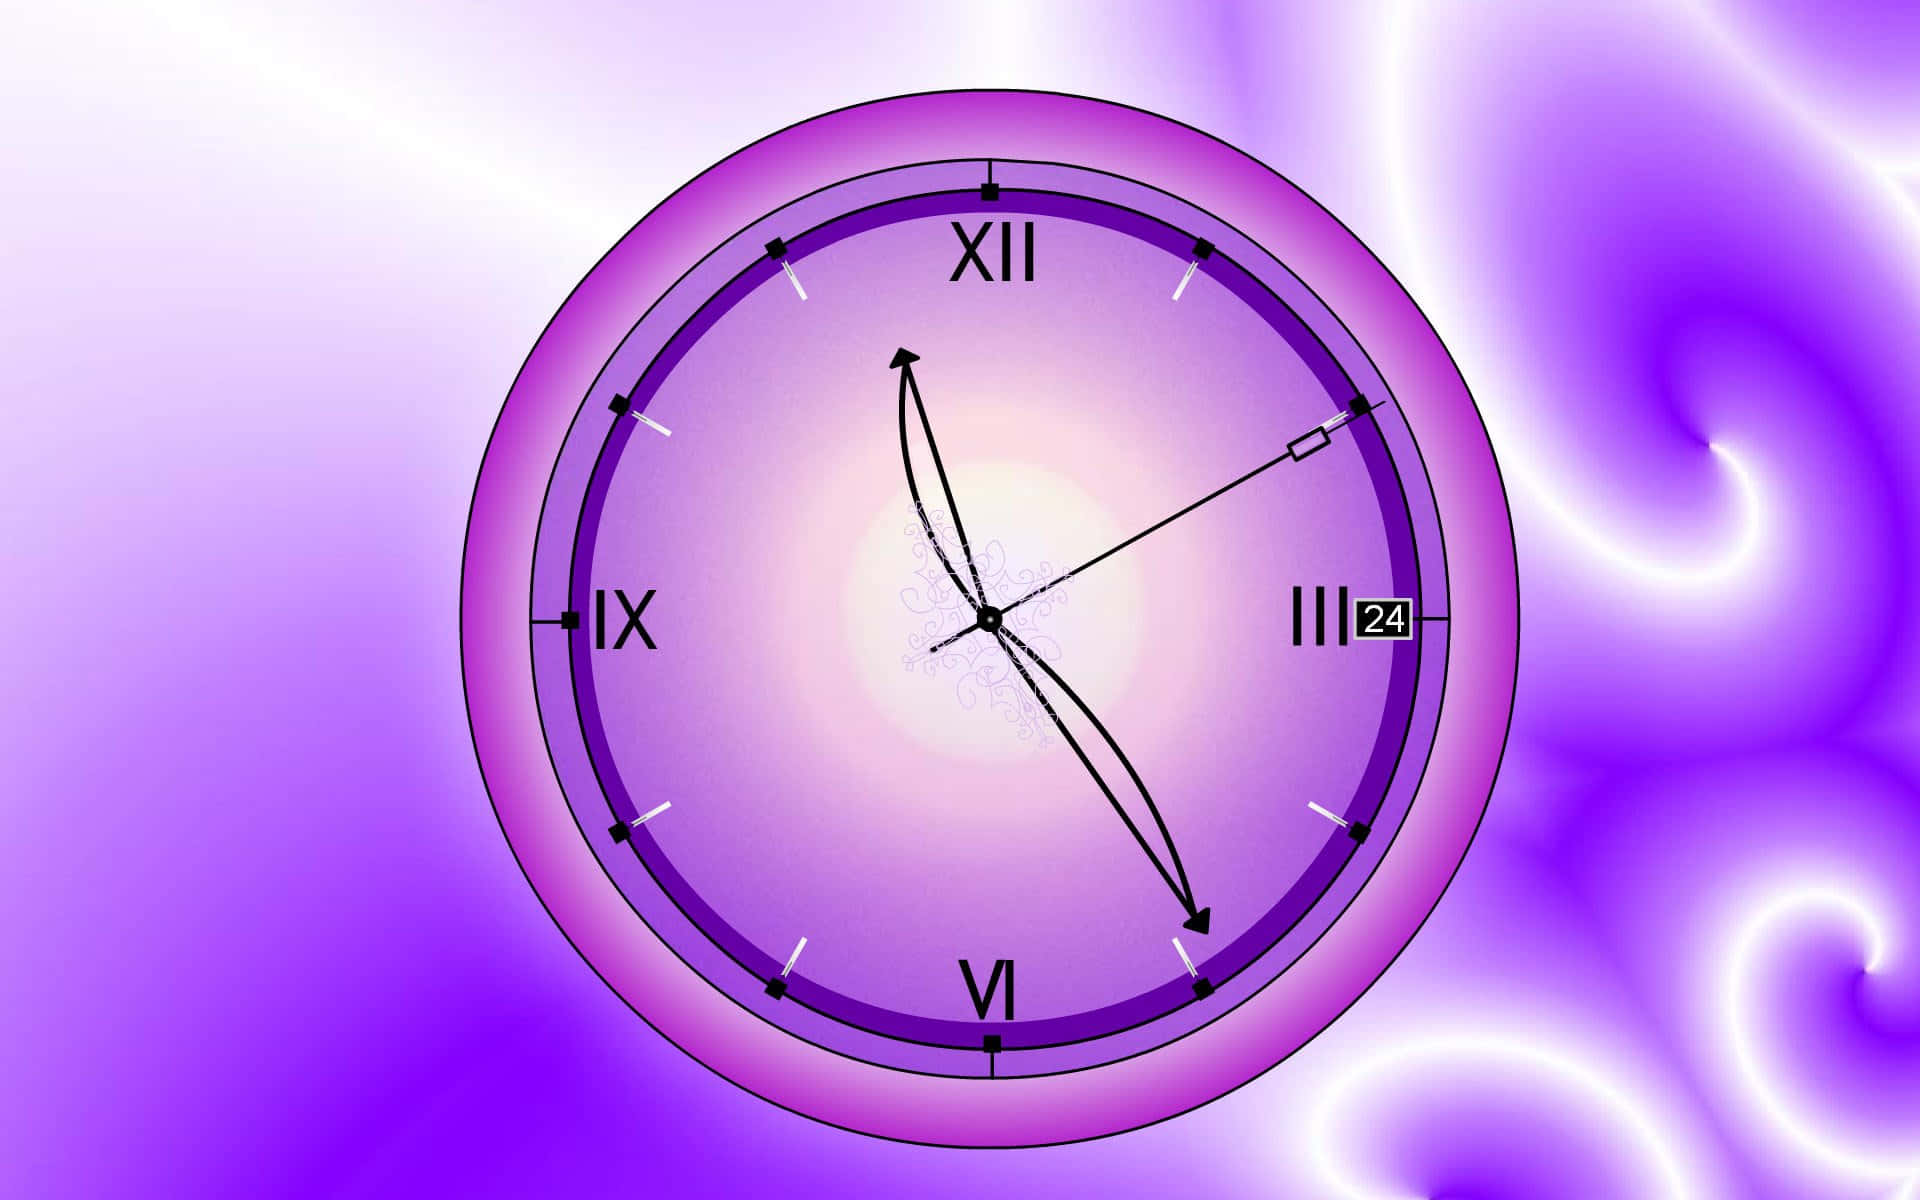 Картинку про часы. Заставка на часы. Часы на фиолетовом фоне. Часы на красивом фоне. Живые обои часы.